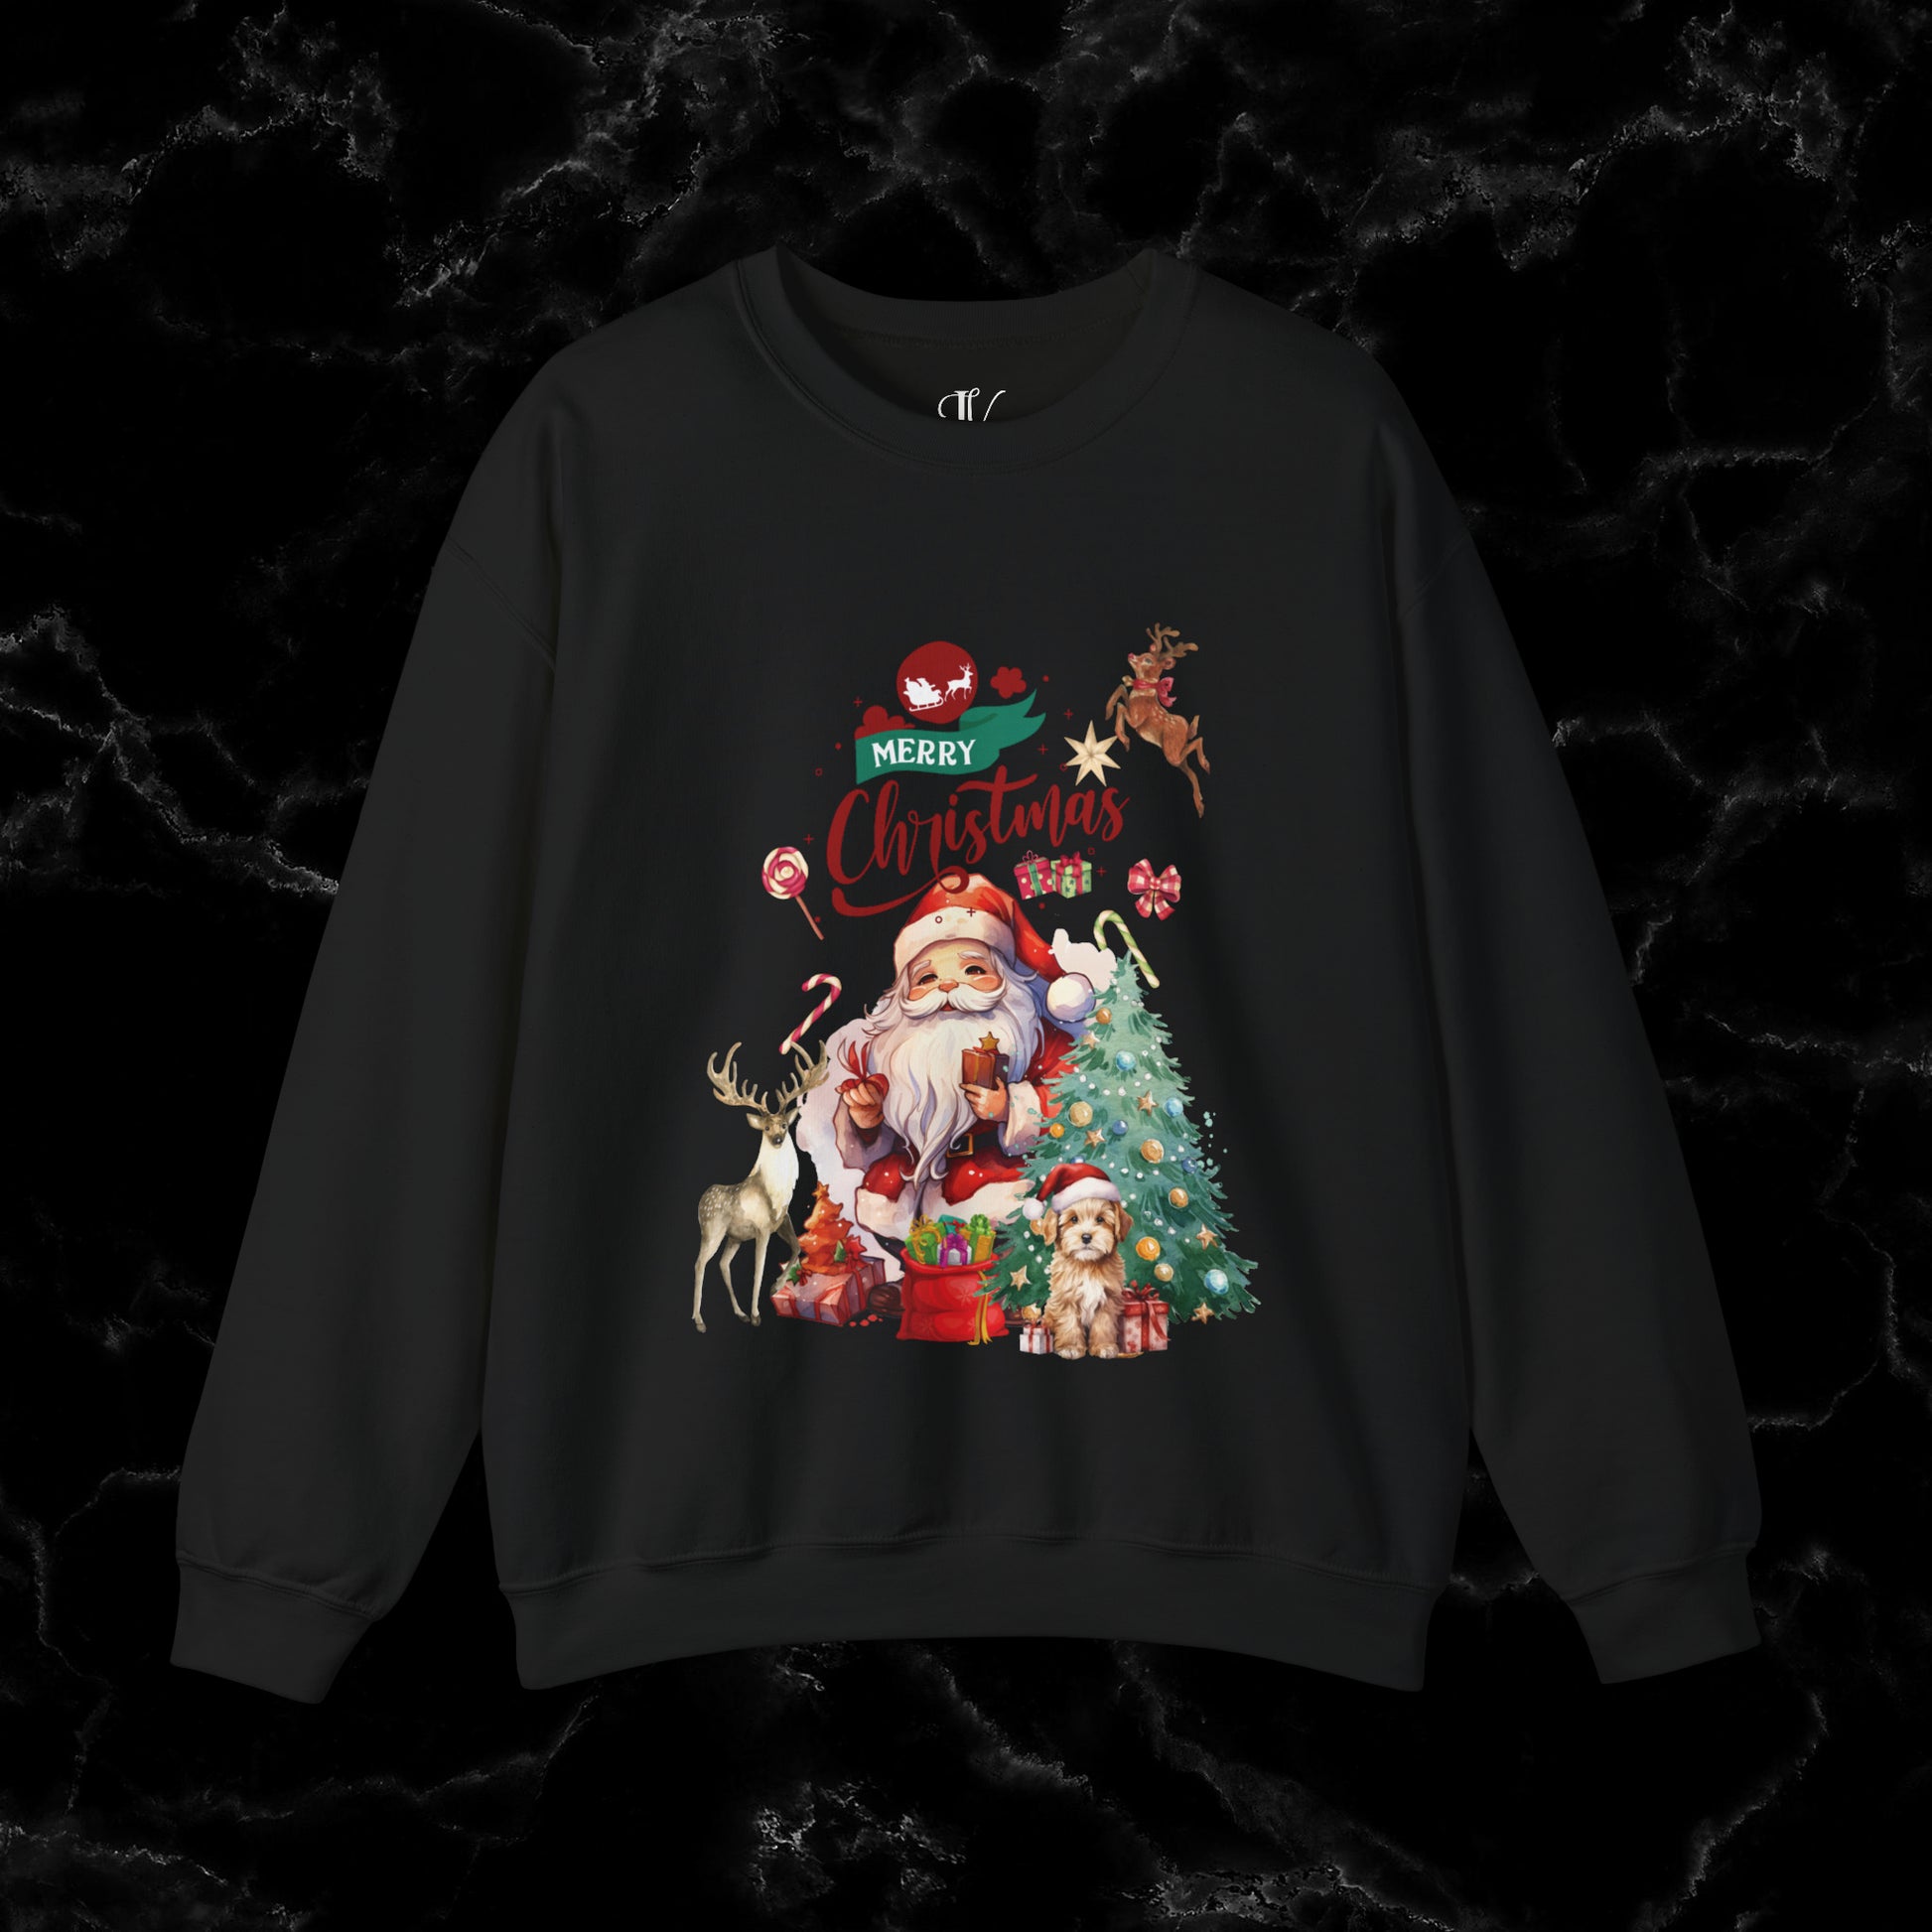 Merry Christmas Sweatshirt | Christmas Shirt - Matching Christmas Shirt - Santa Claus Merry Christmas Sweatshirt - Holiday Gift - Christmas Gift Sweatshirt S Black 